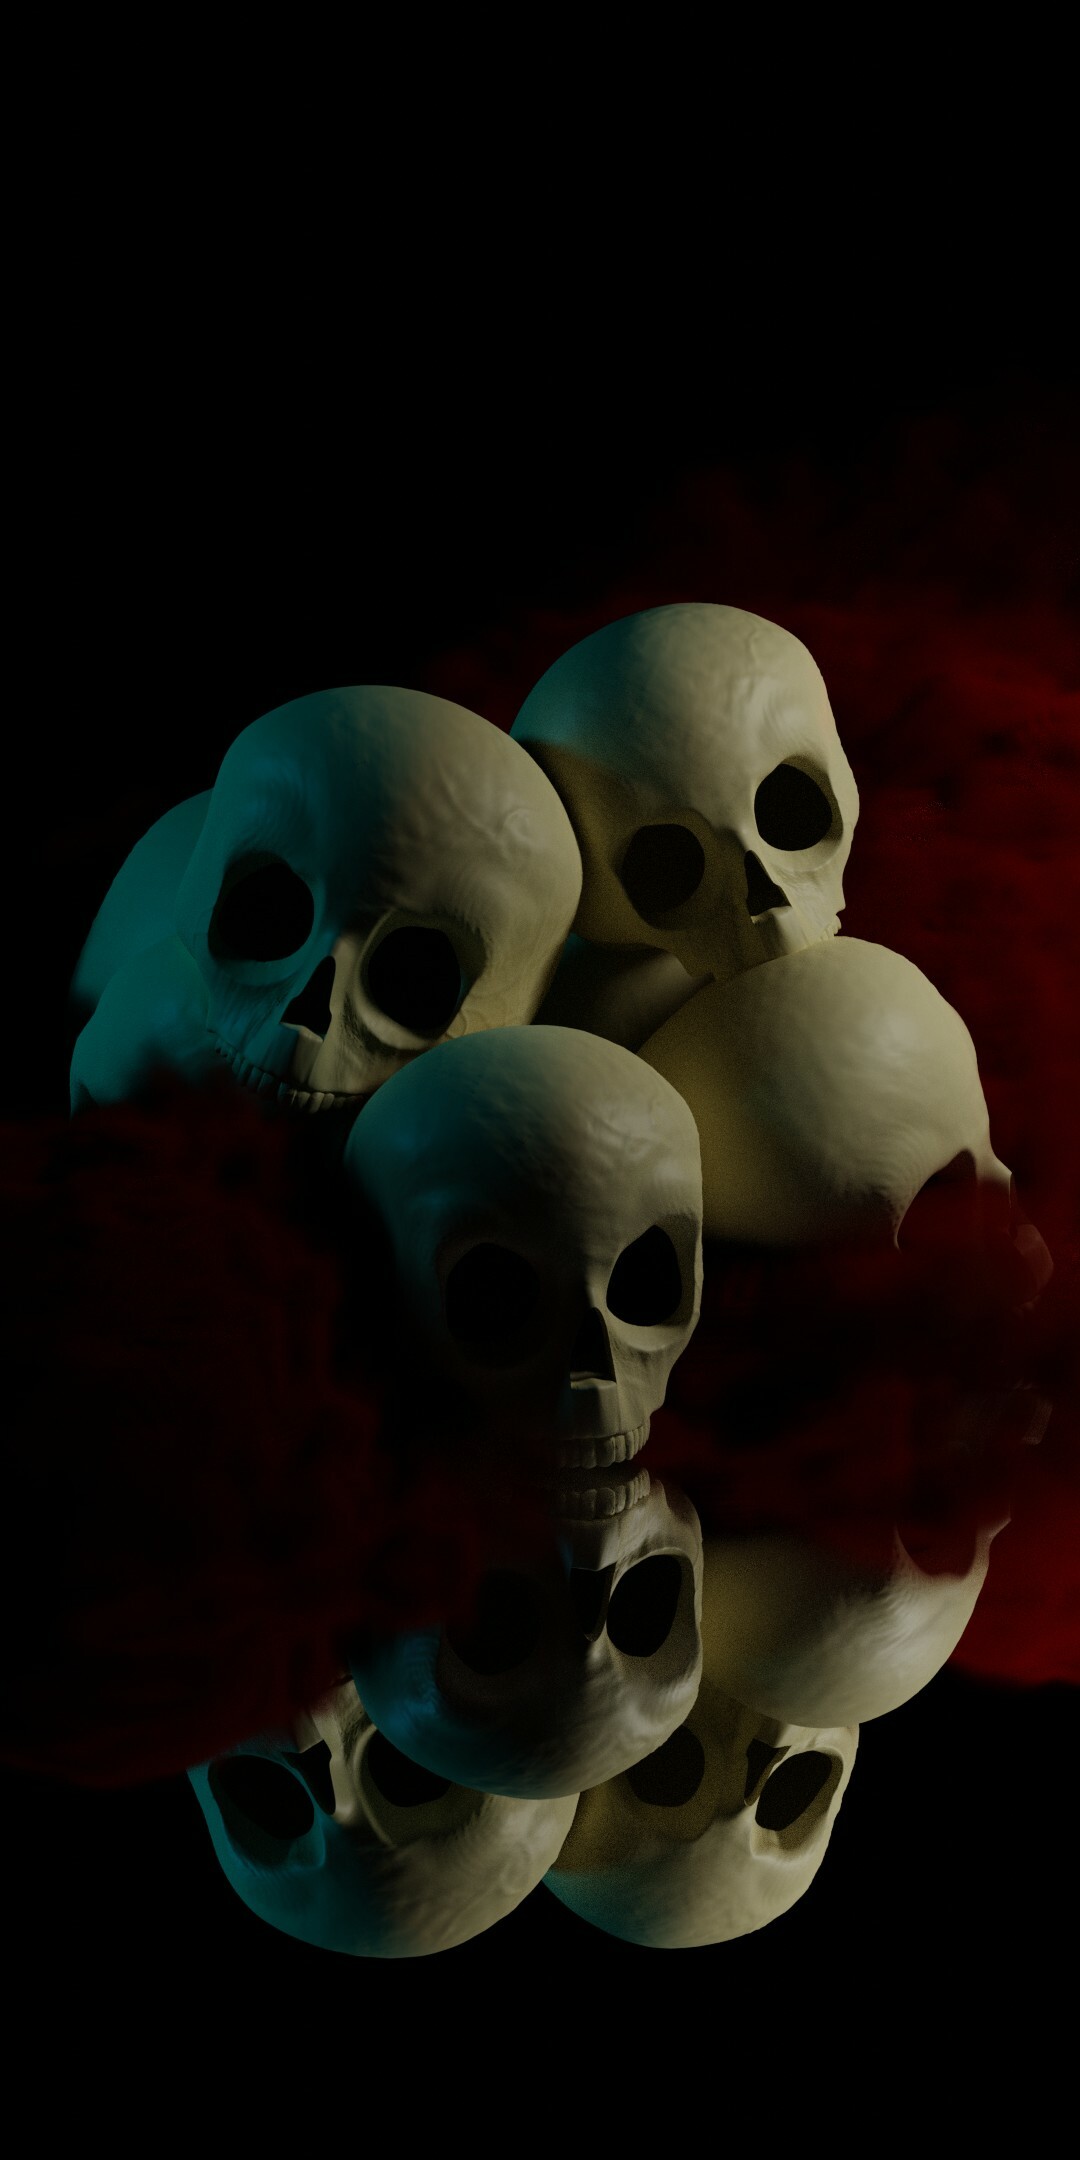 1062 3d Flaming Skull Images Stock Photos  Vectors  Shutterstock